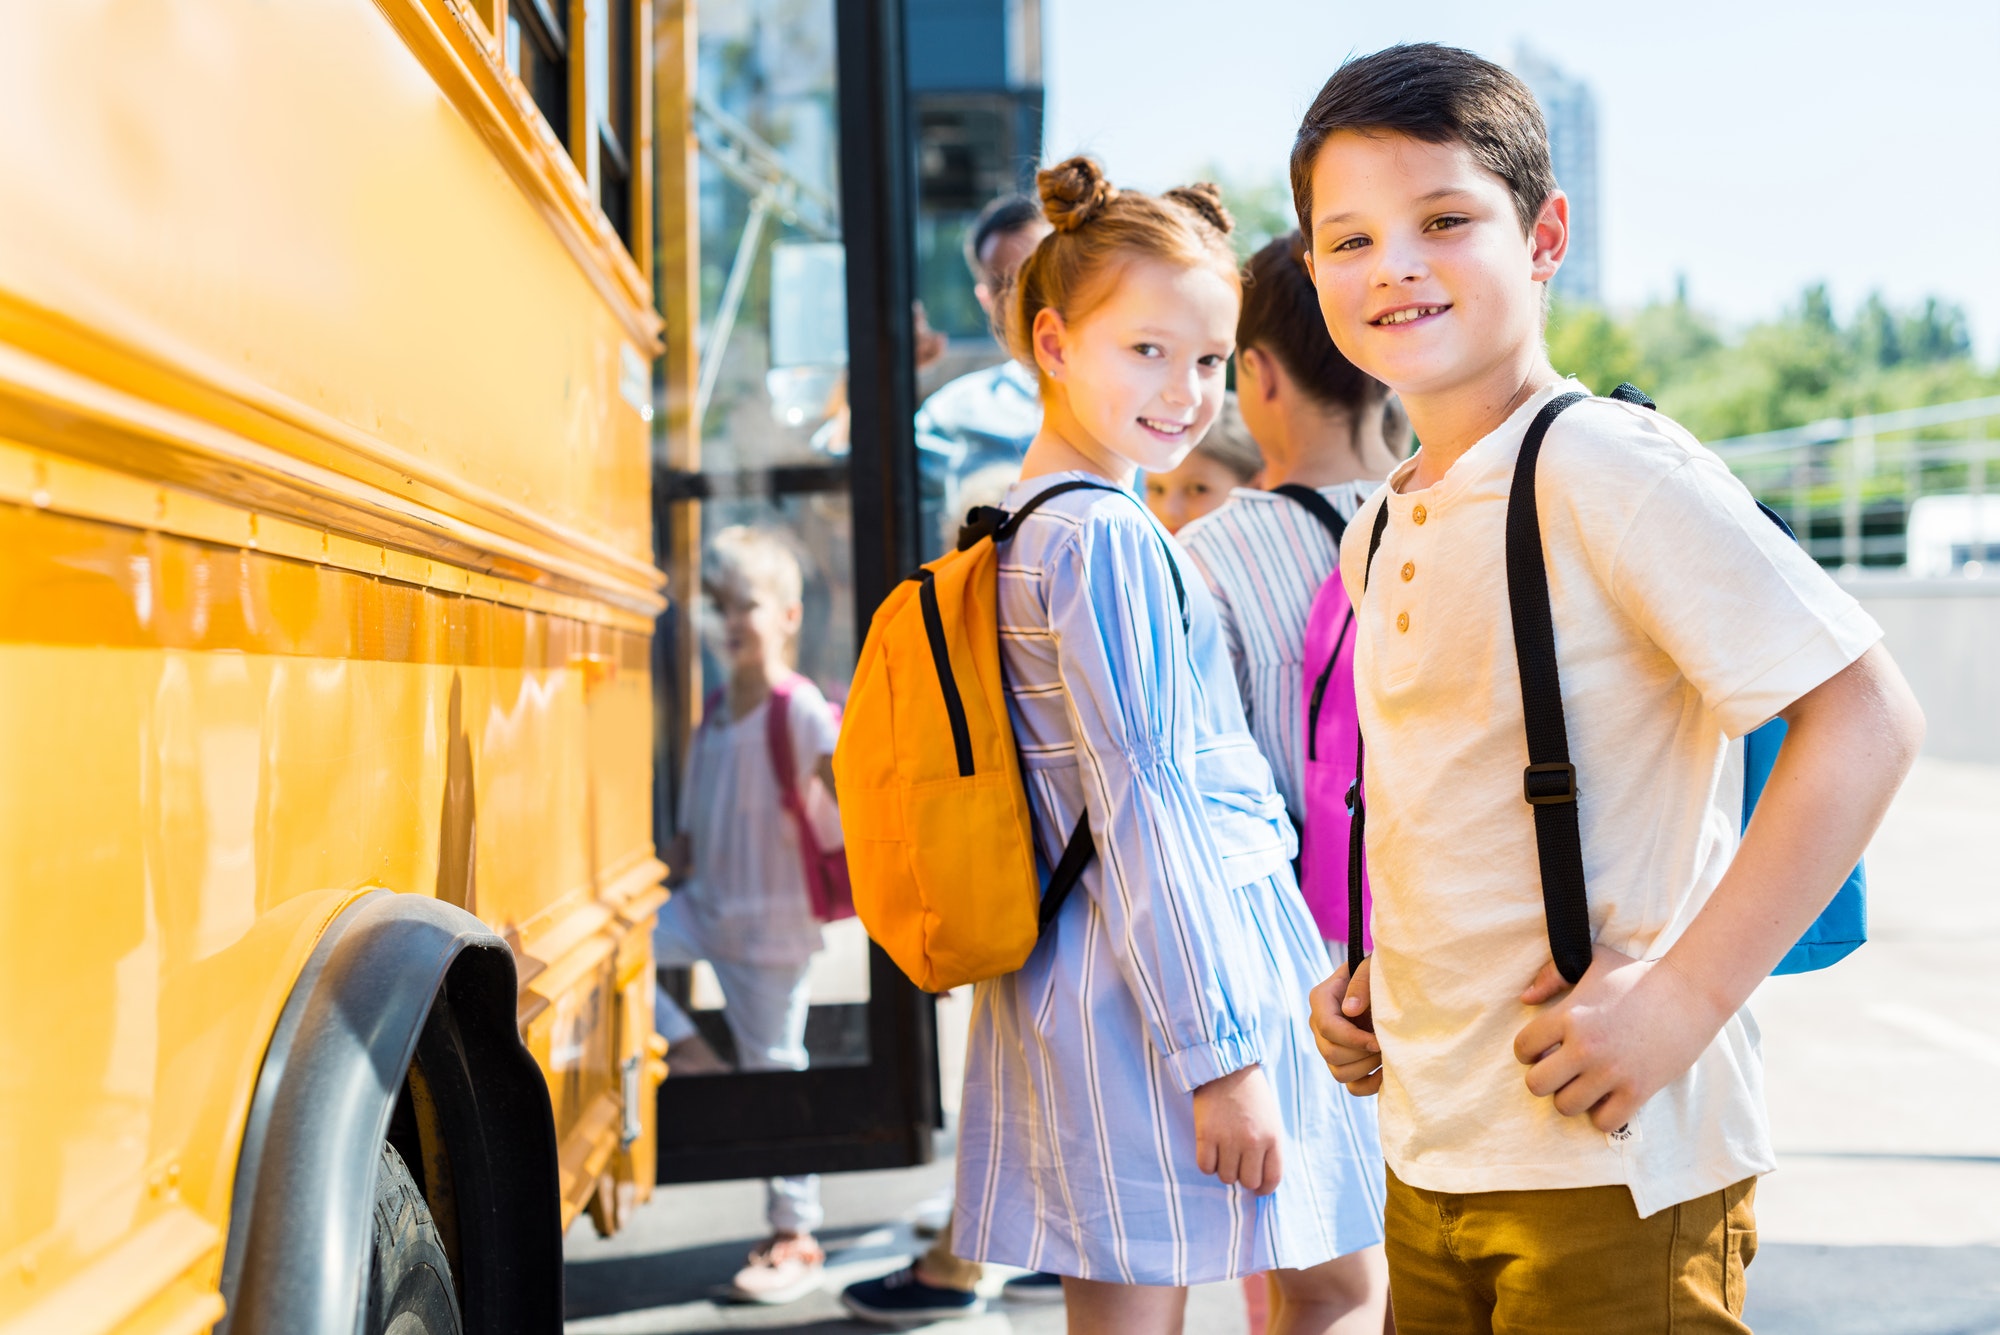 smiling little pupils entering school bus with classmates